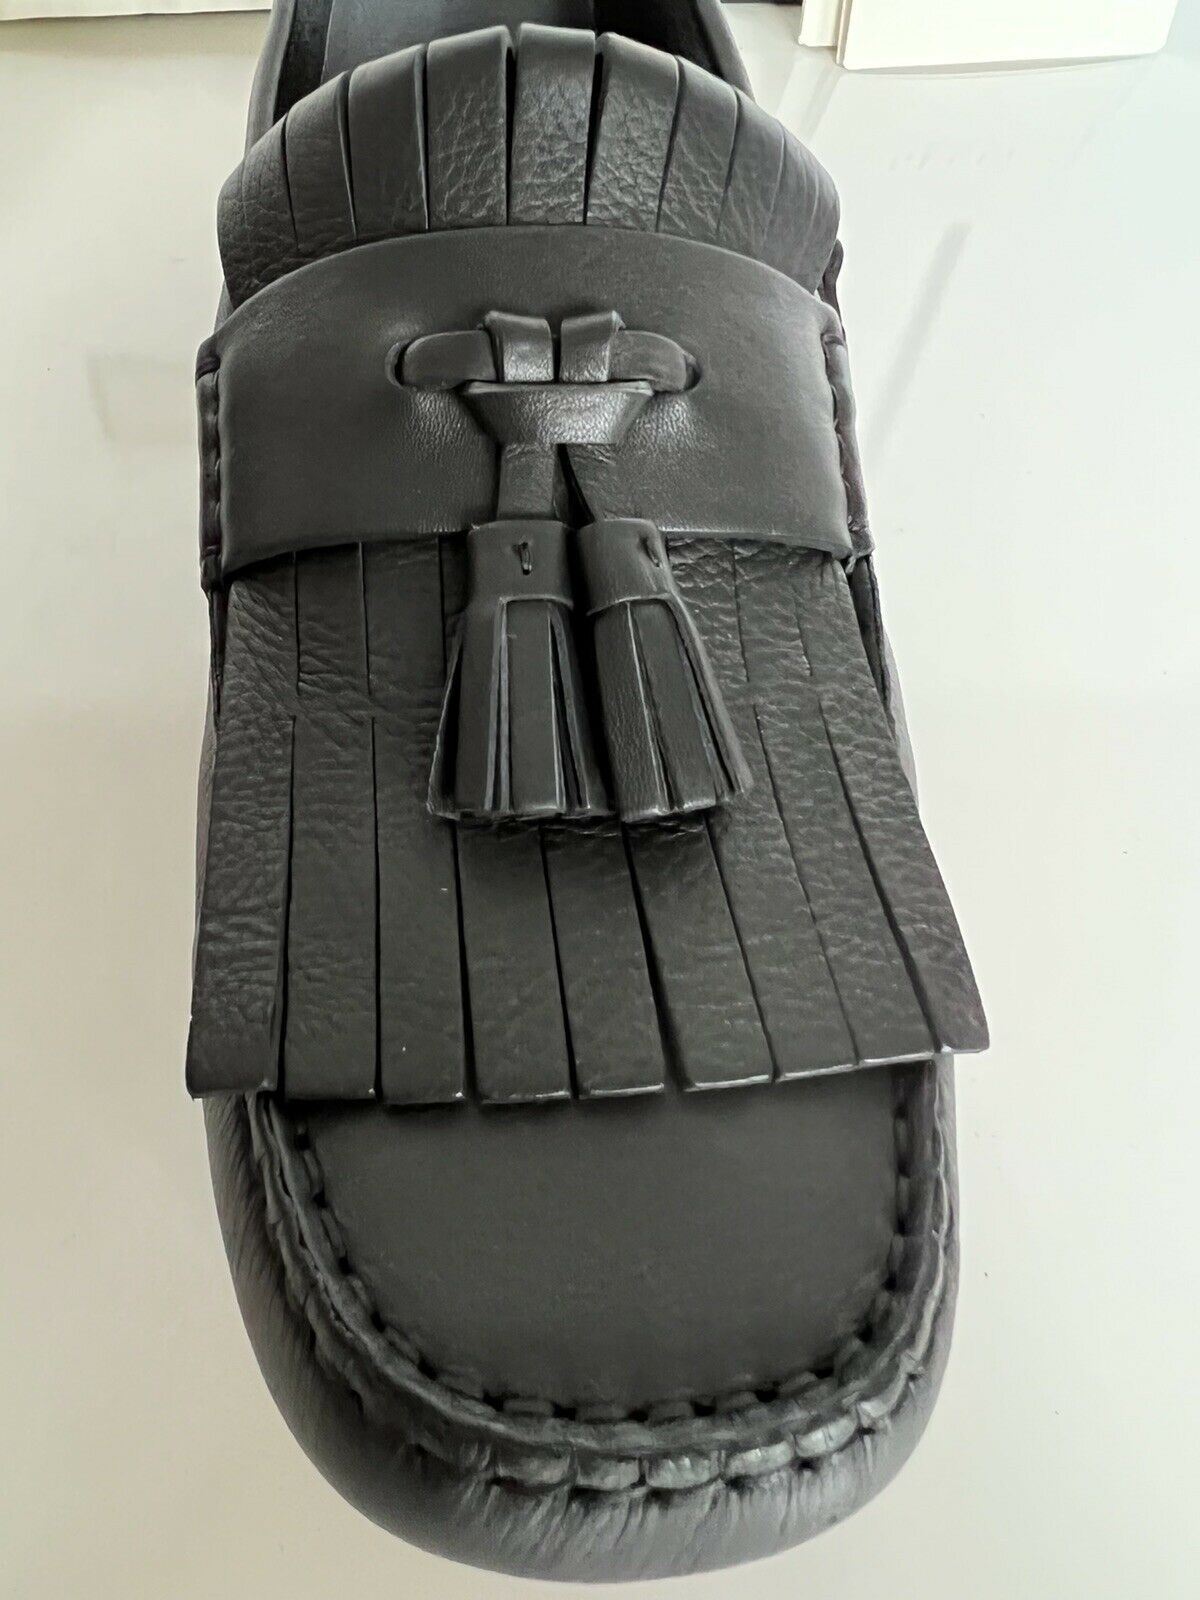 NIB Gucci Men's Clove Calf Soft Leather Driver Shoes Black 9.5 US/8.5 UK 624699